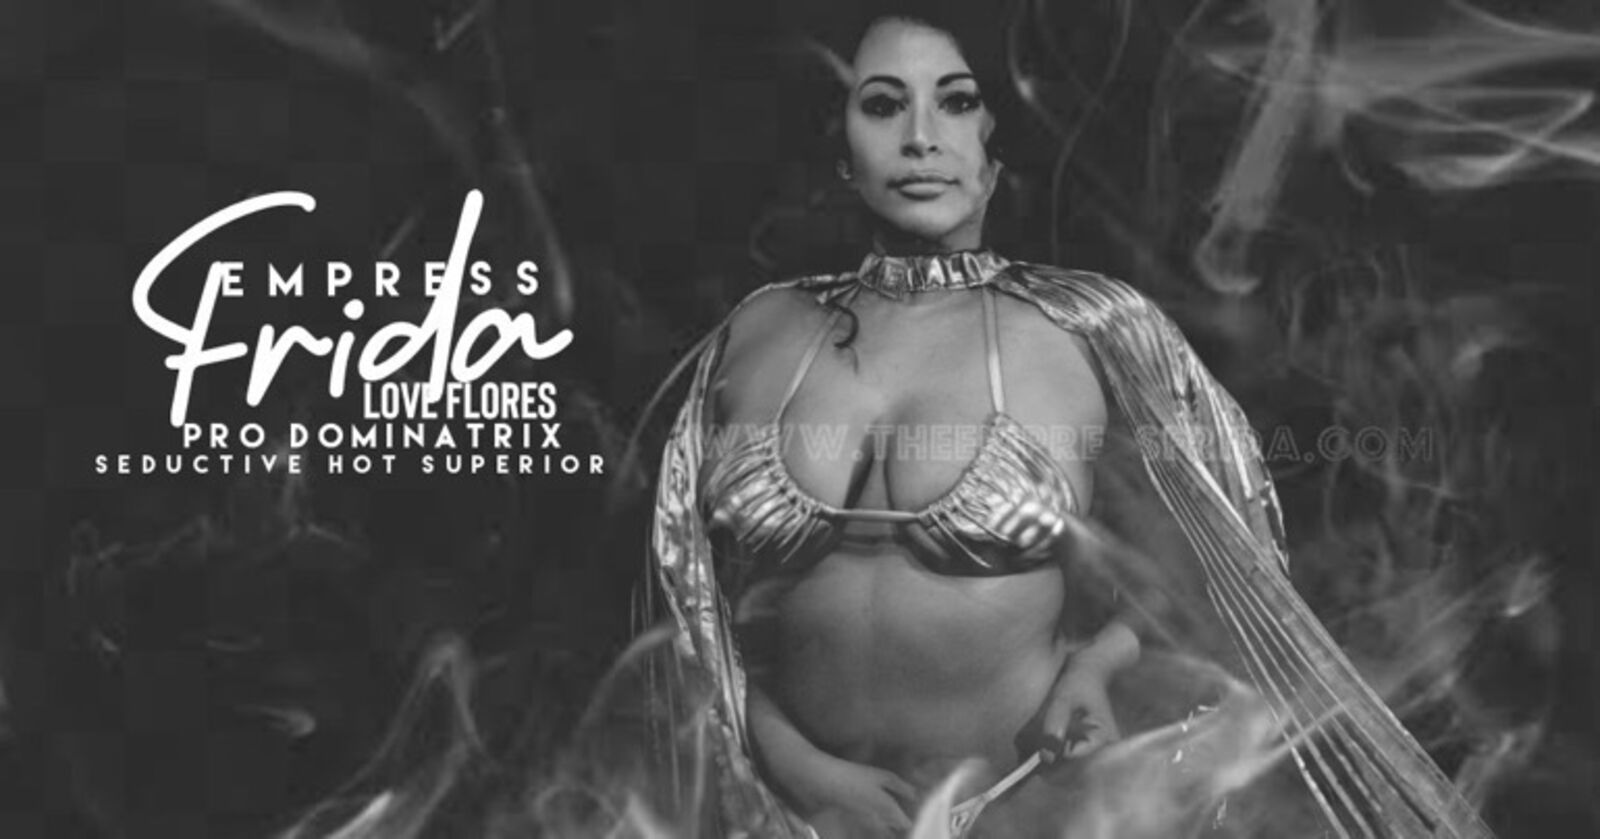 See Empress Frida Love Flores profile